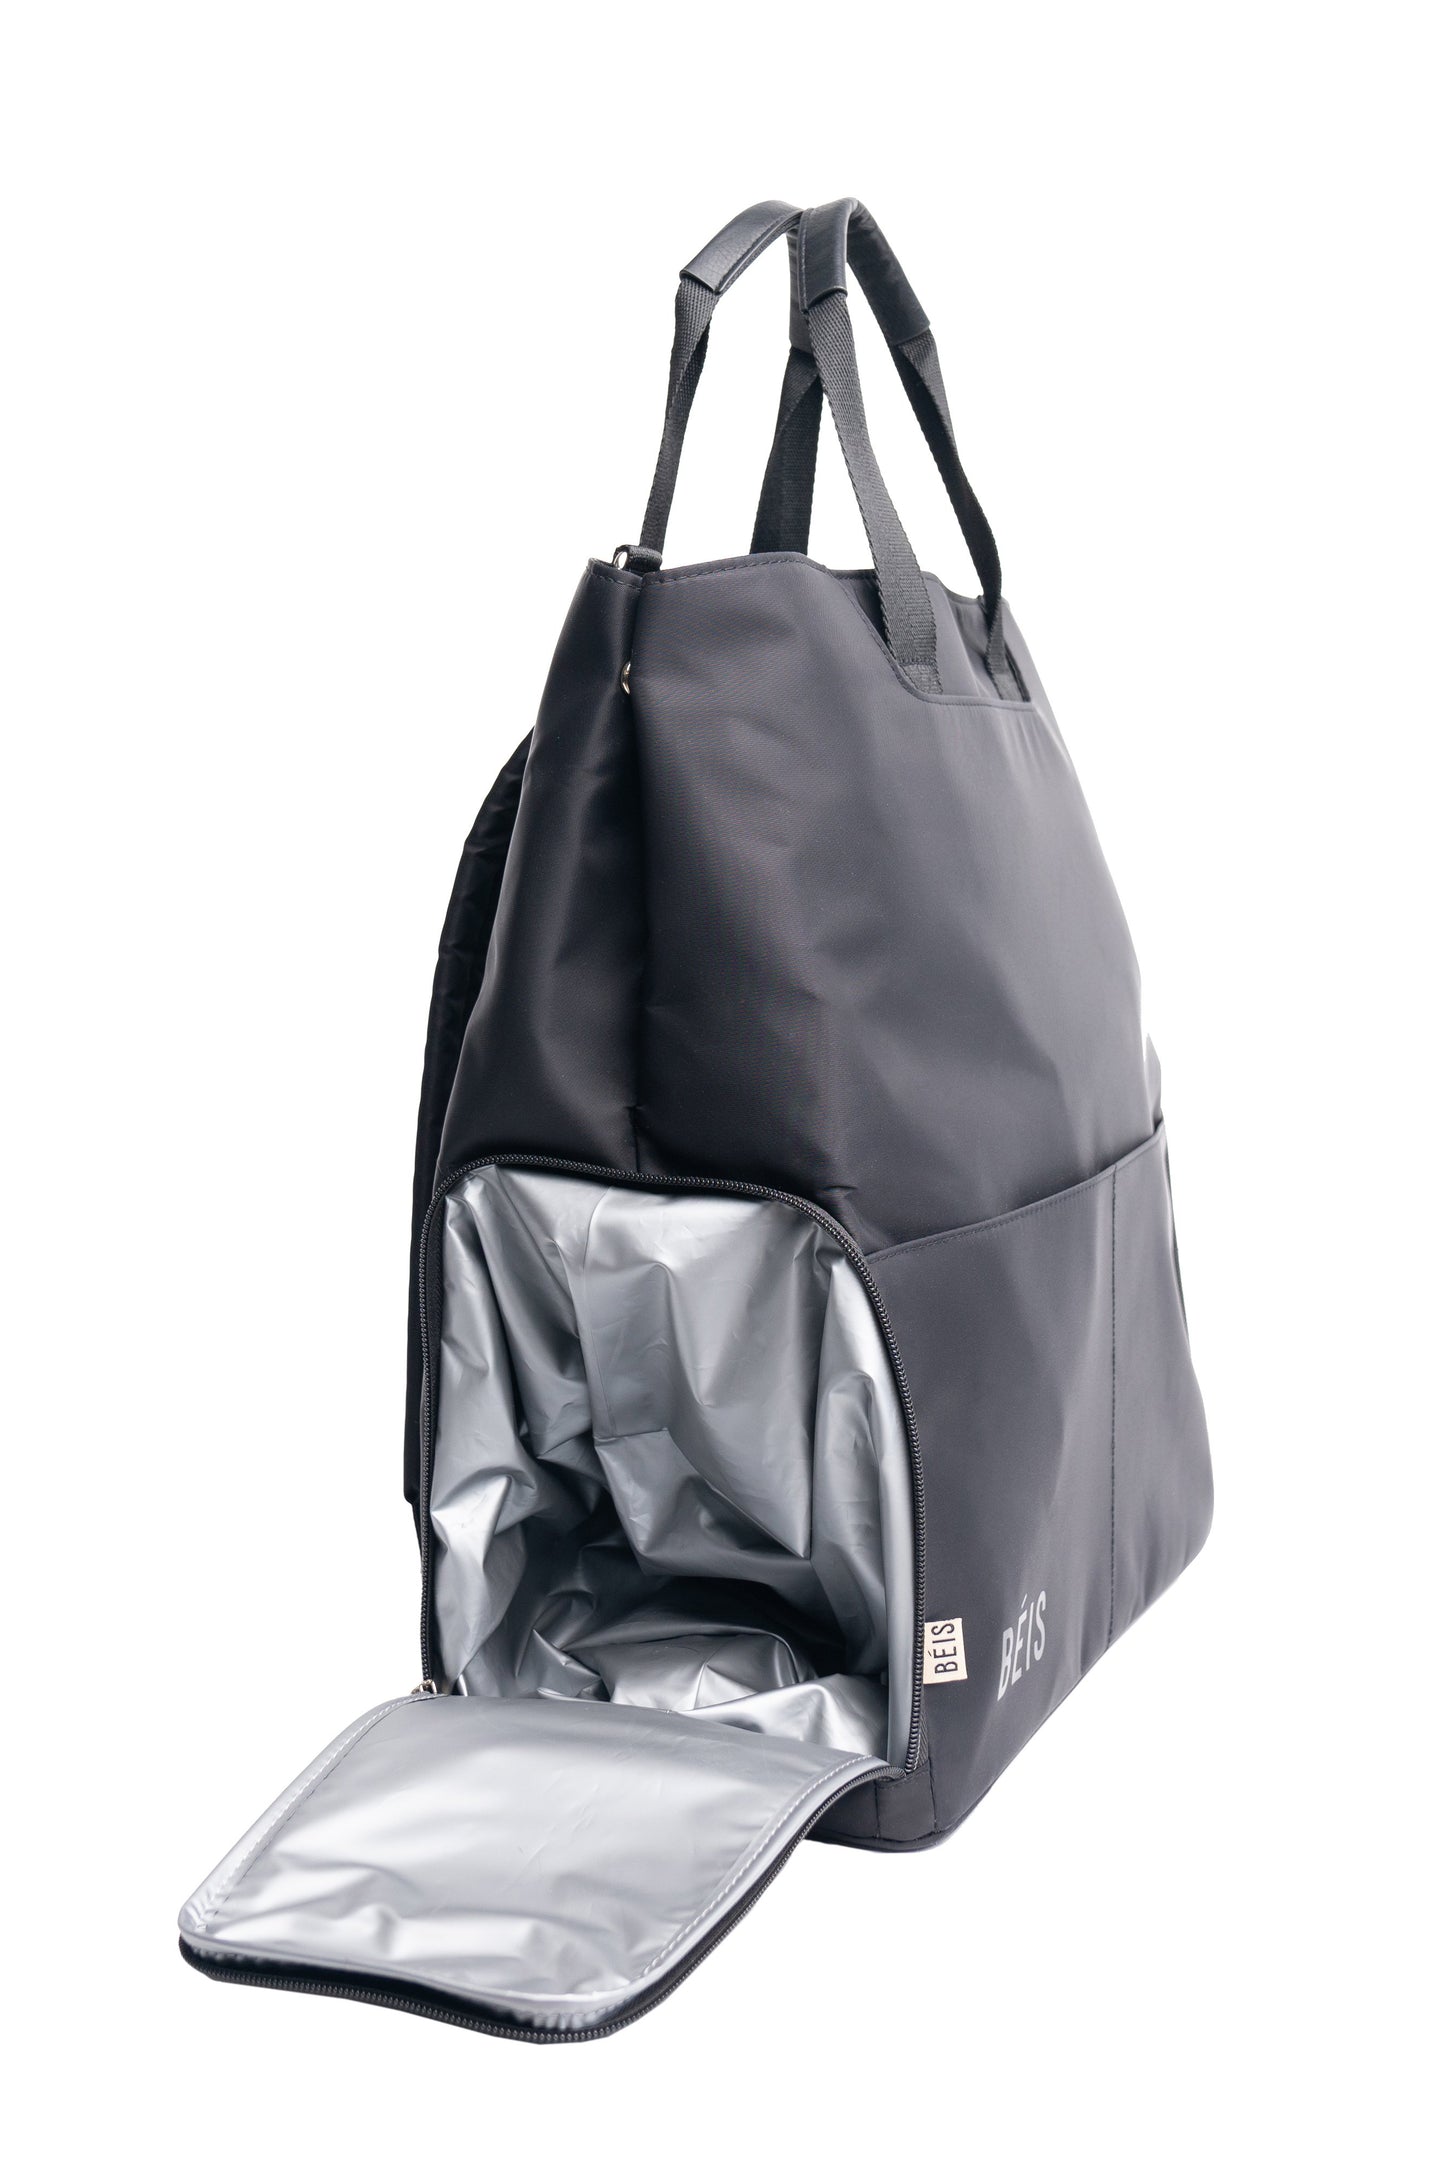 Pumping Backpack Black Open Side Zipper Insulated Inside 